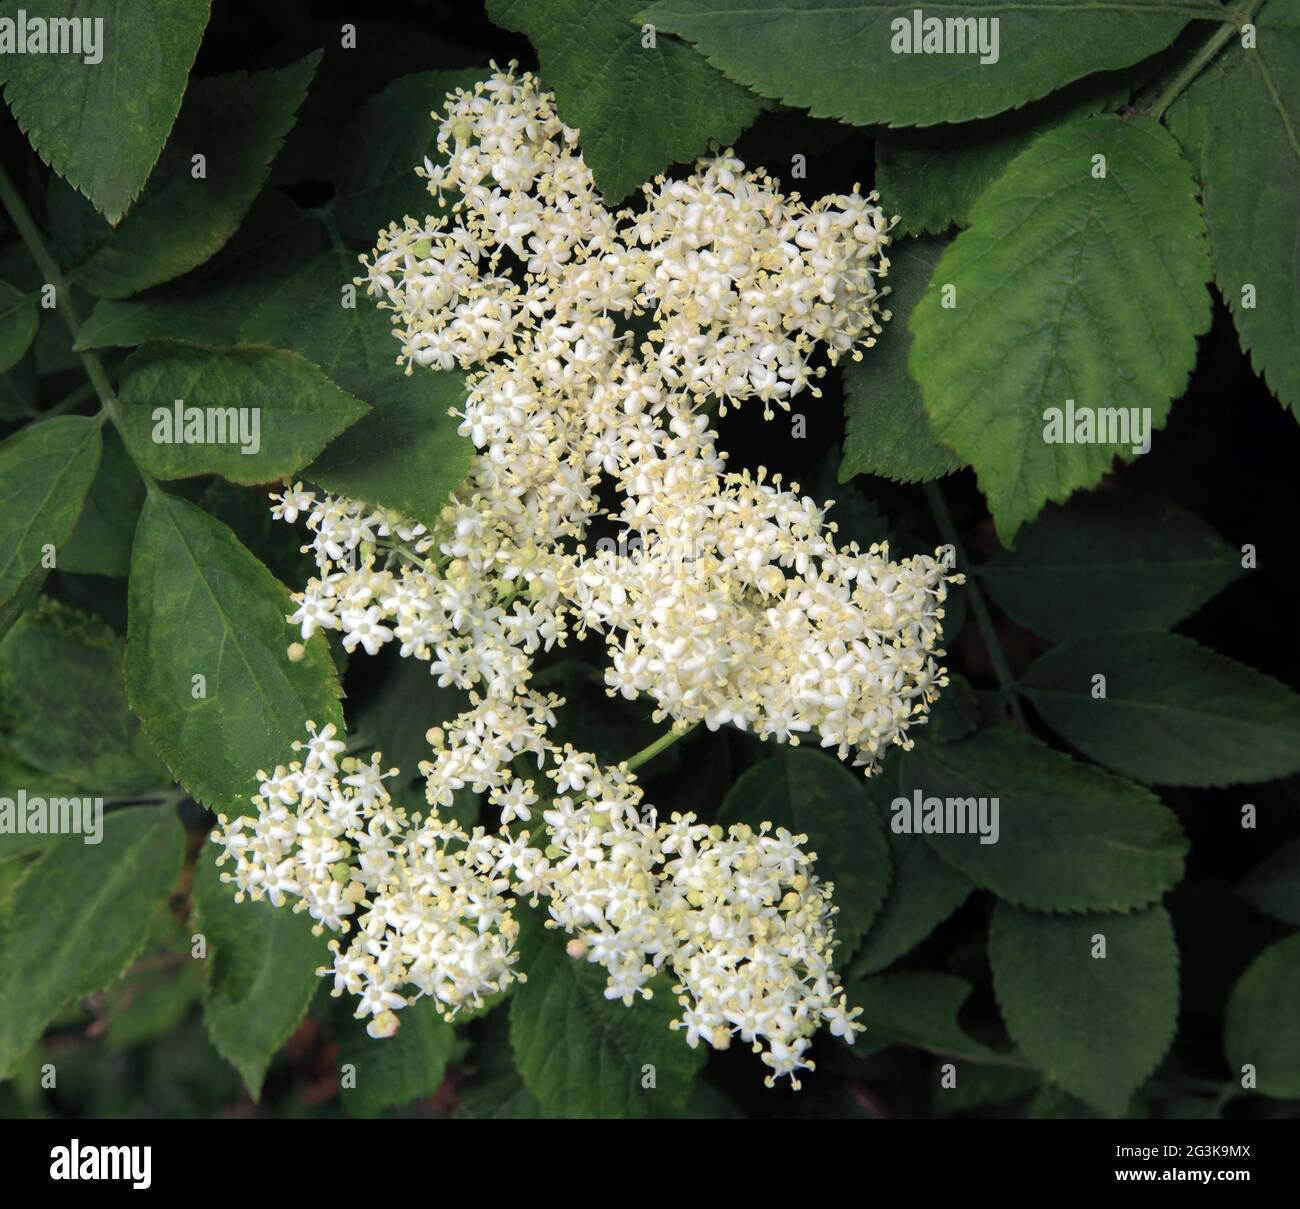 Sambucus nigra, Elderflower, fiori profumati, fiori bianchi, piante da giardino, bush, albero. Foto Stock